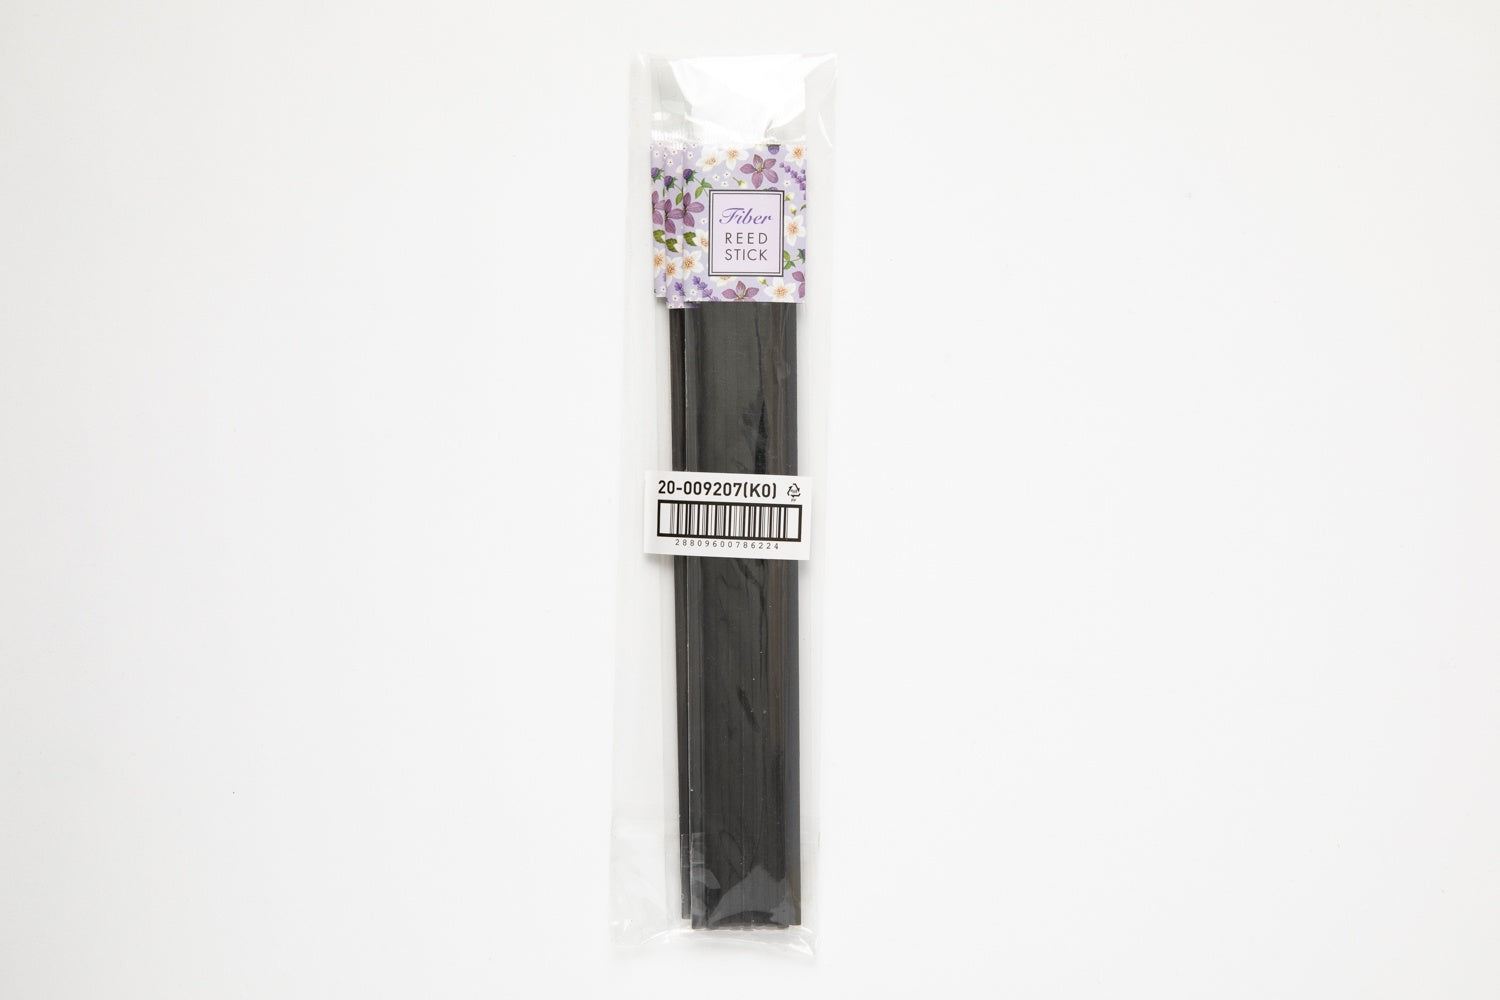 Diffuser Fiber Reed Stick Black